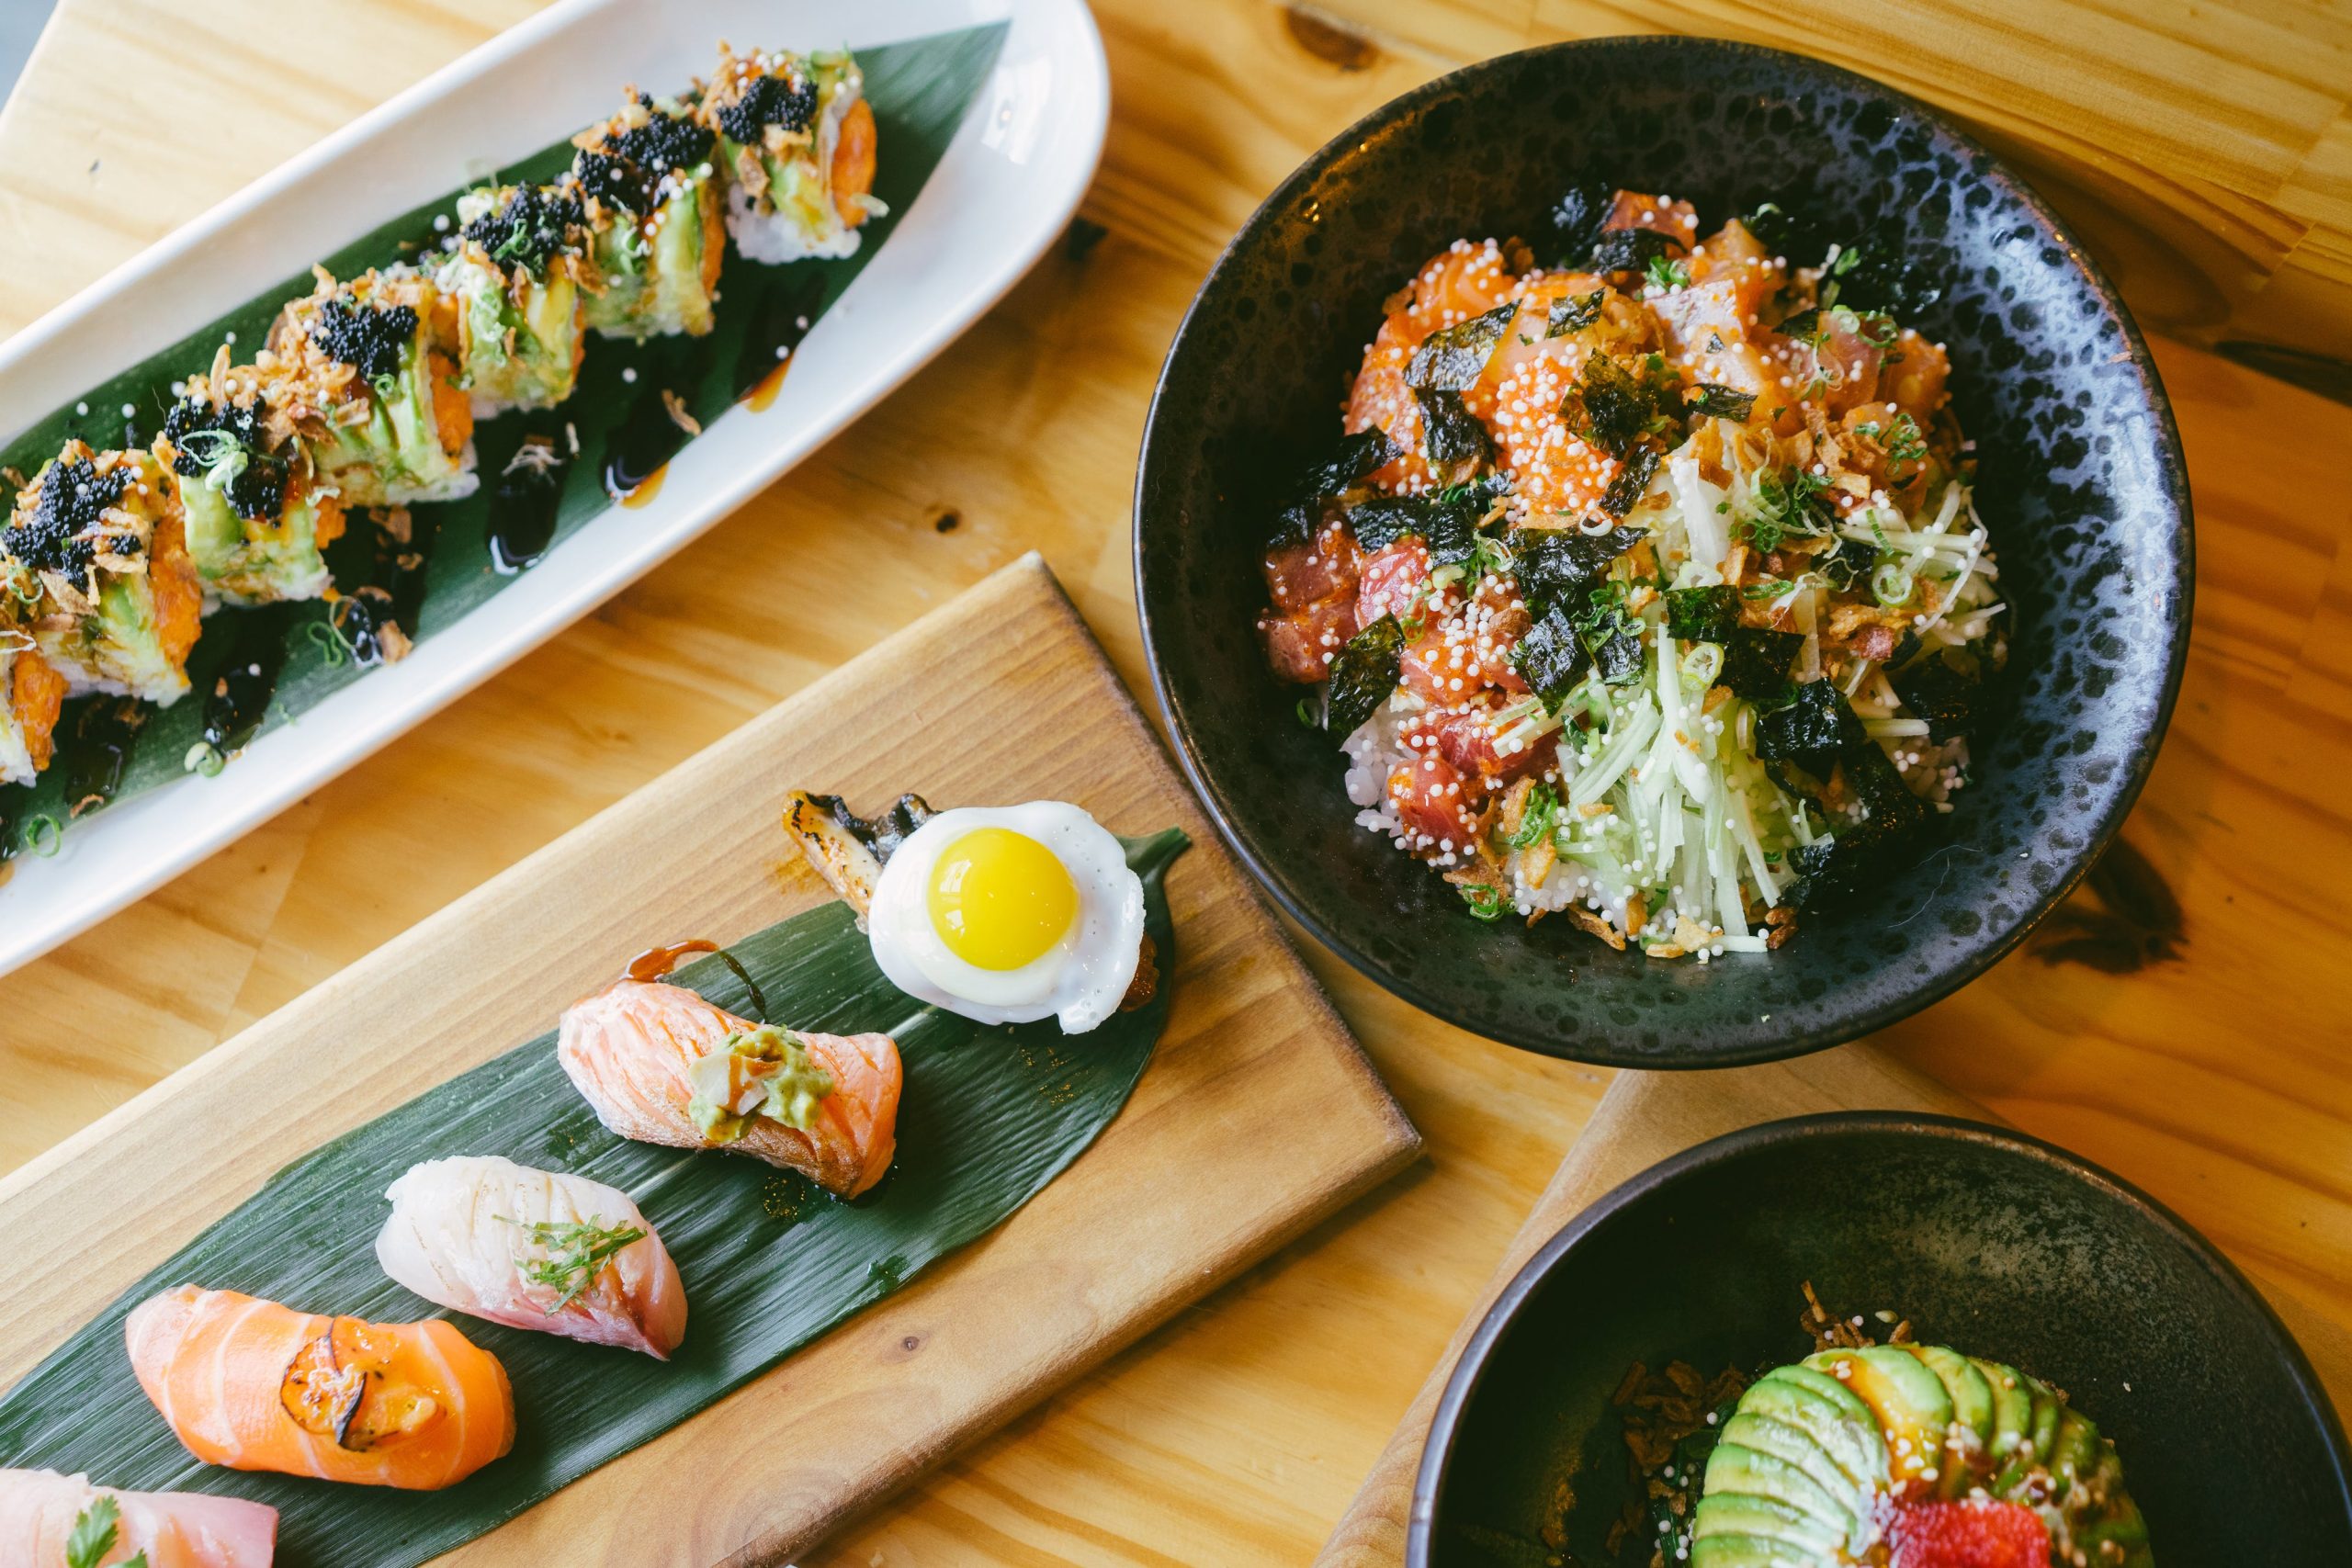 Can sushi be vegetarian or vegan?